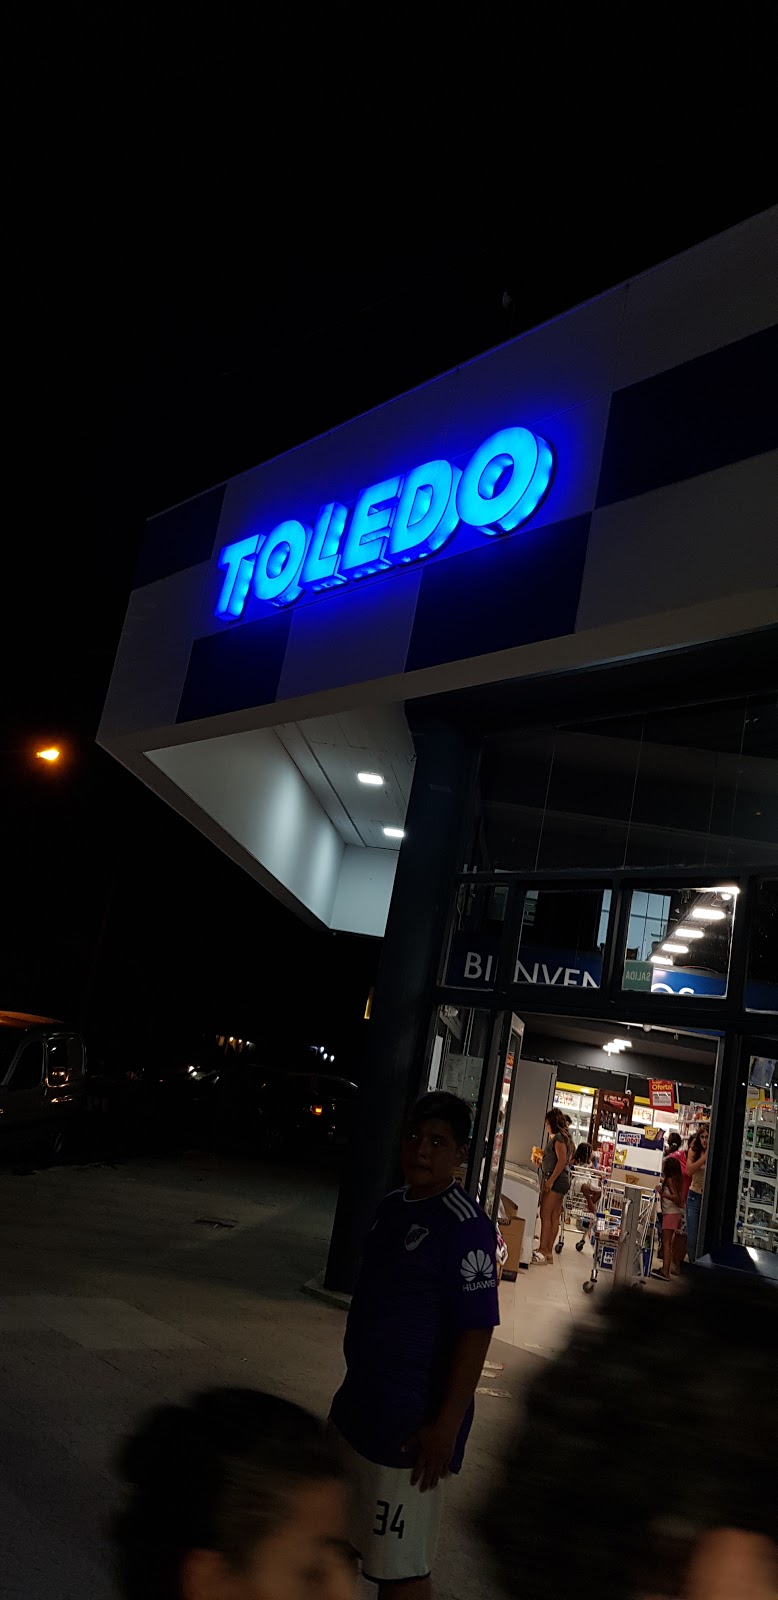 Toledo Supermercado